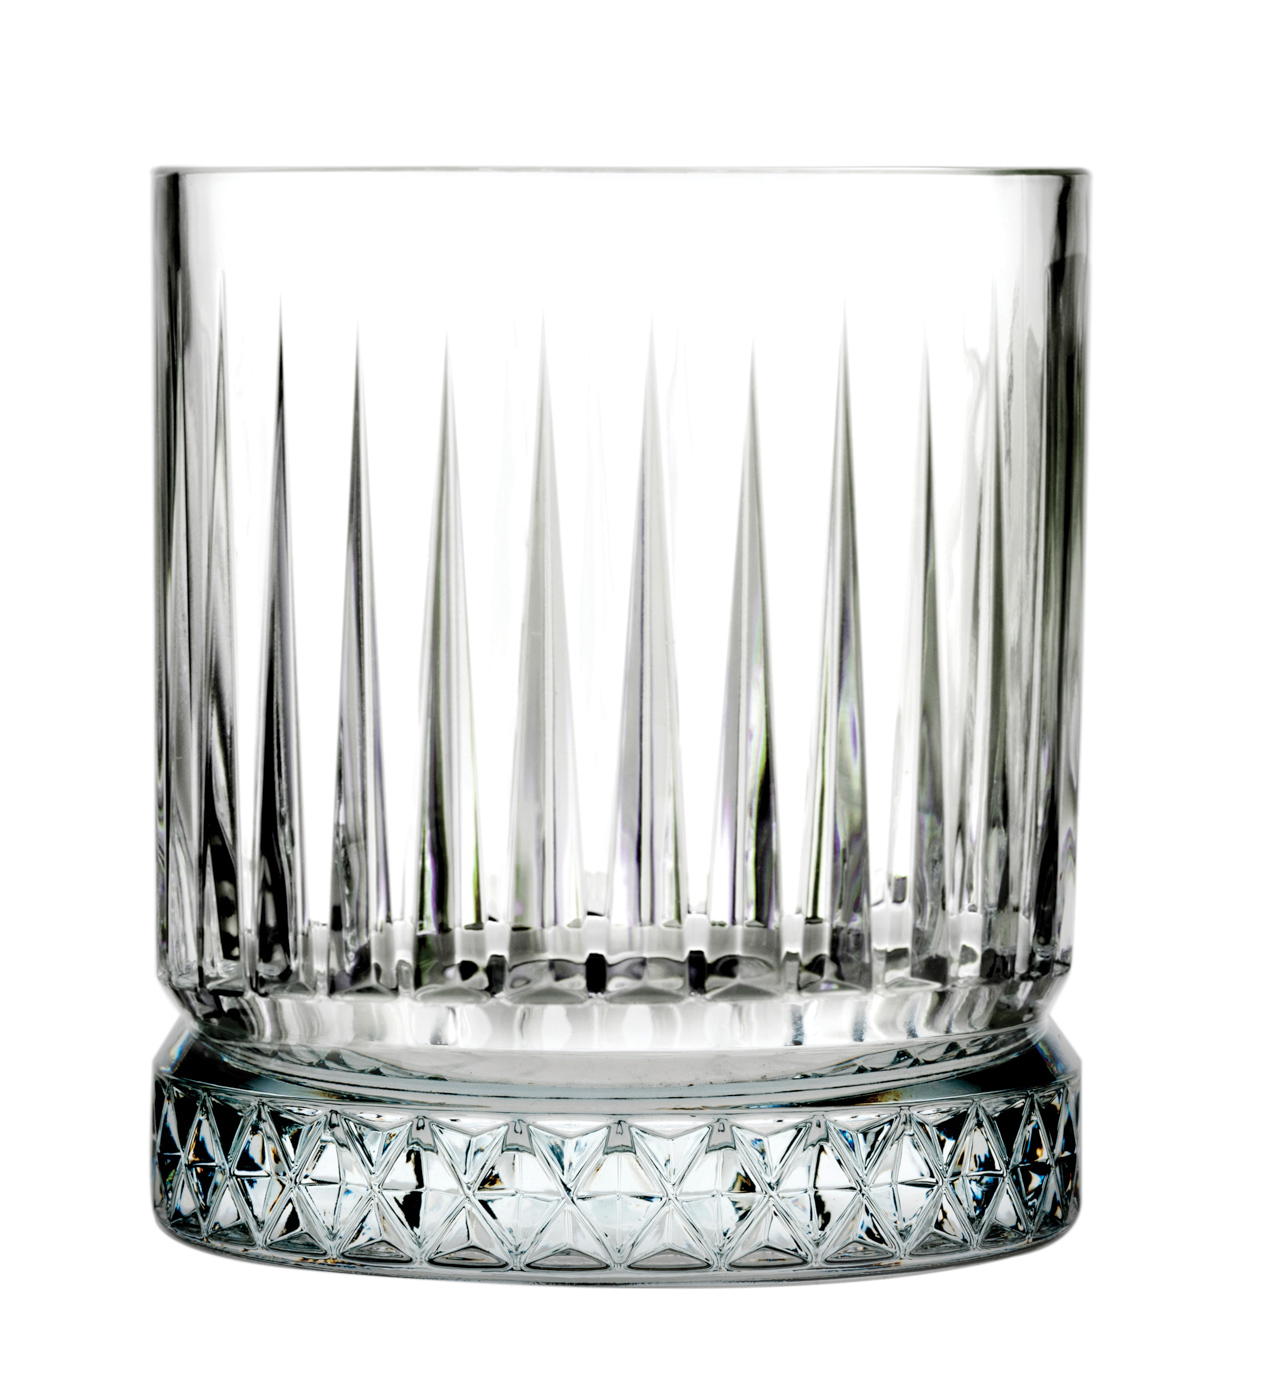 Whiskyglas Pasabahce Elysia, 0,355 ltr., Ø 8,4 cm, Set á 12 Stück, Glas